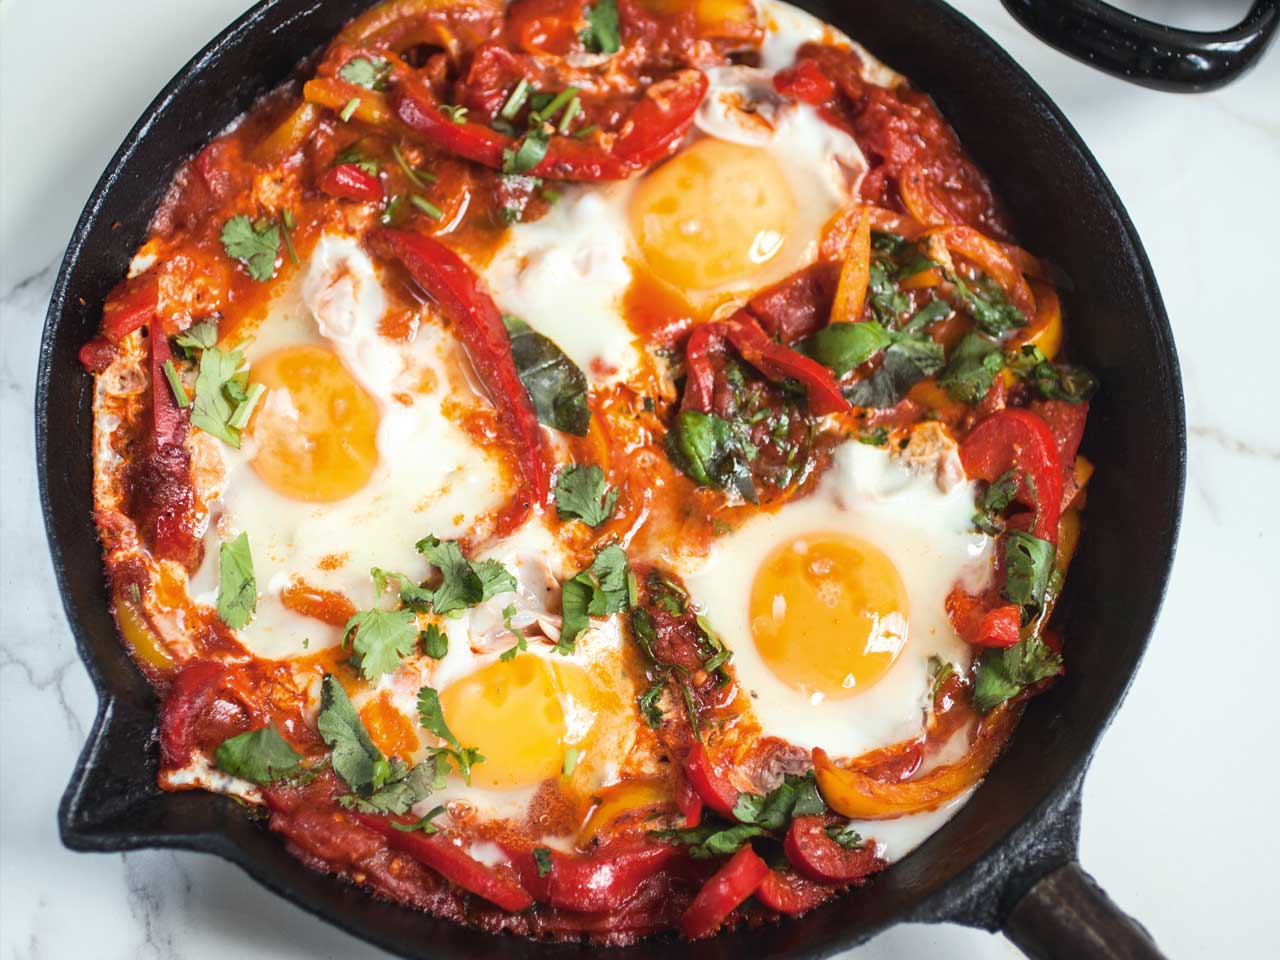 Shakshuka – eggs poached in tomatoes